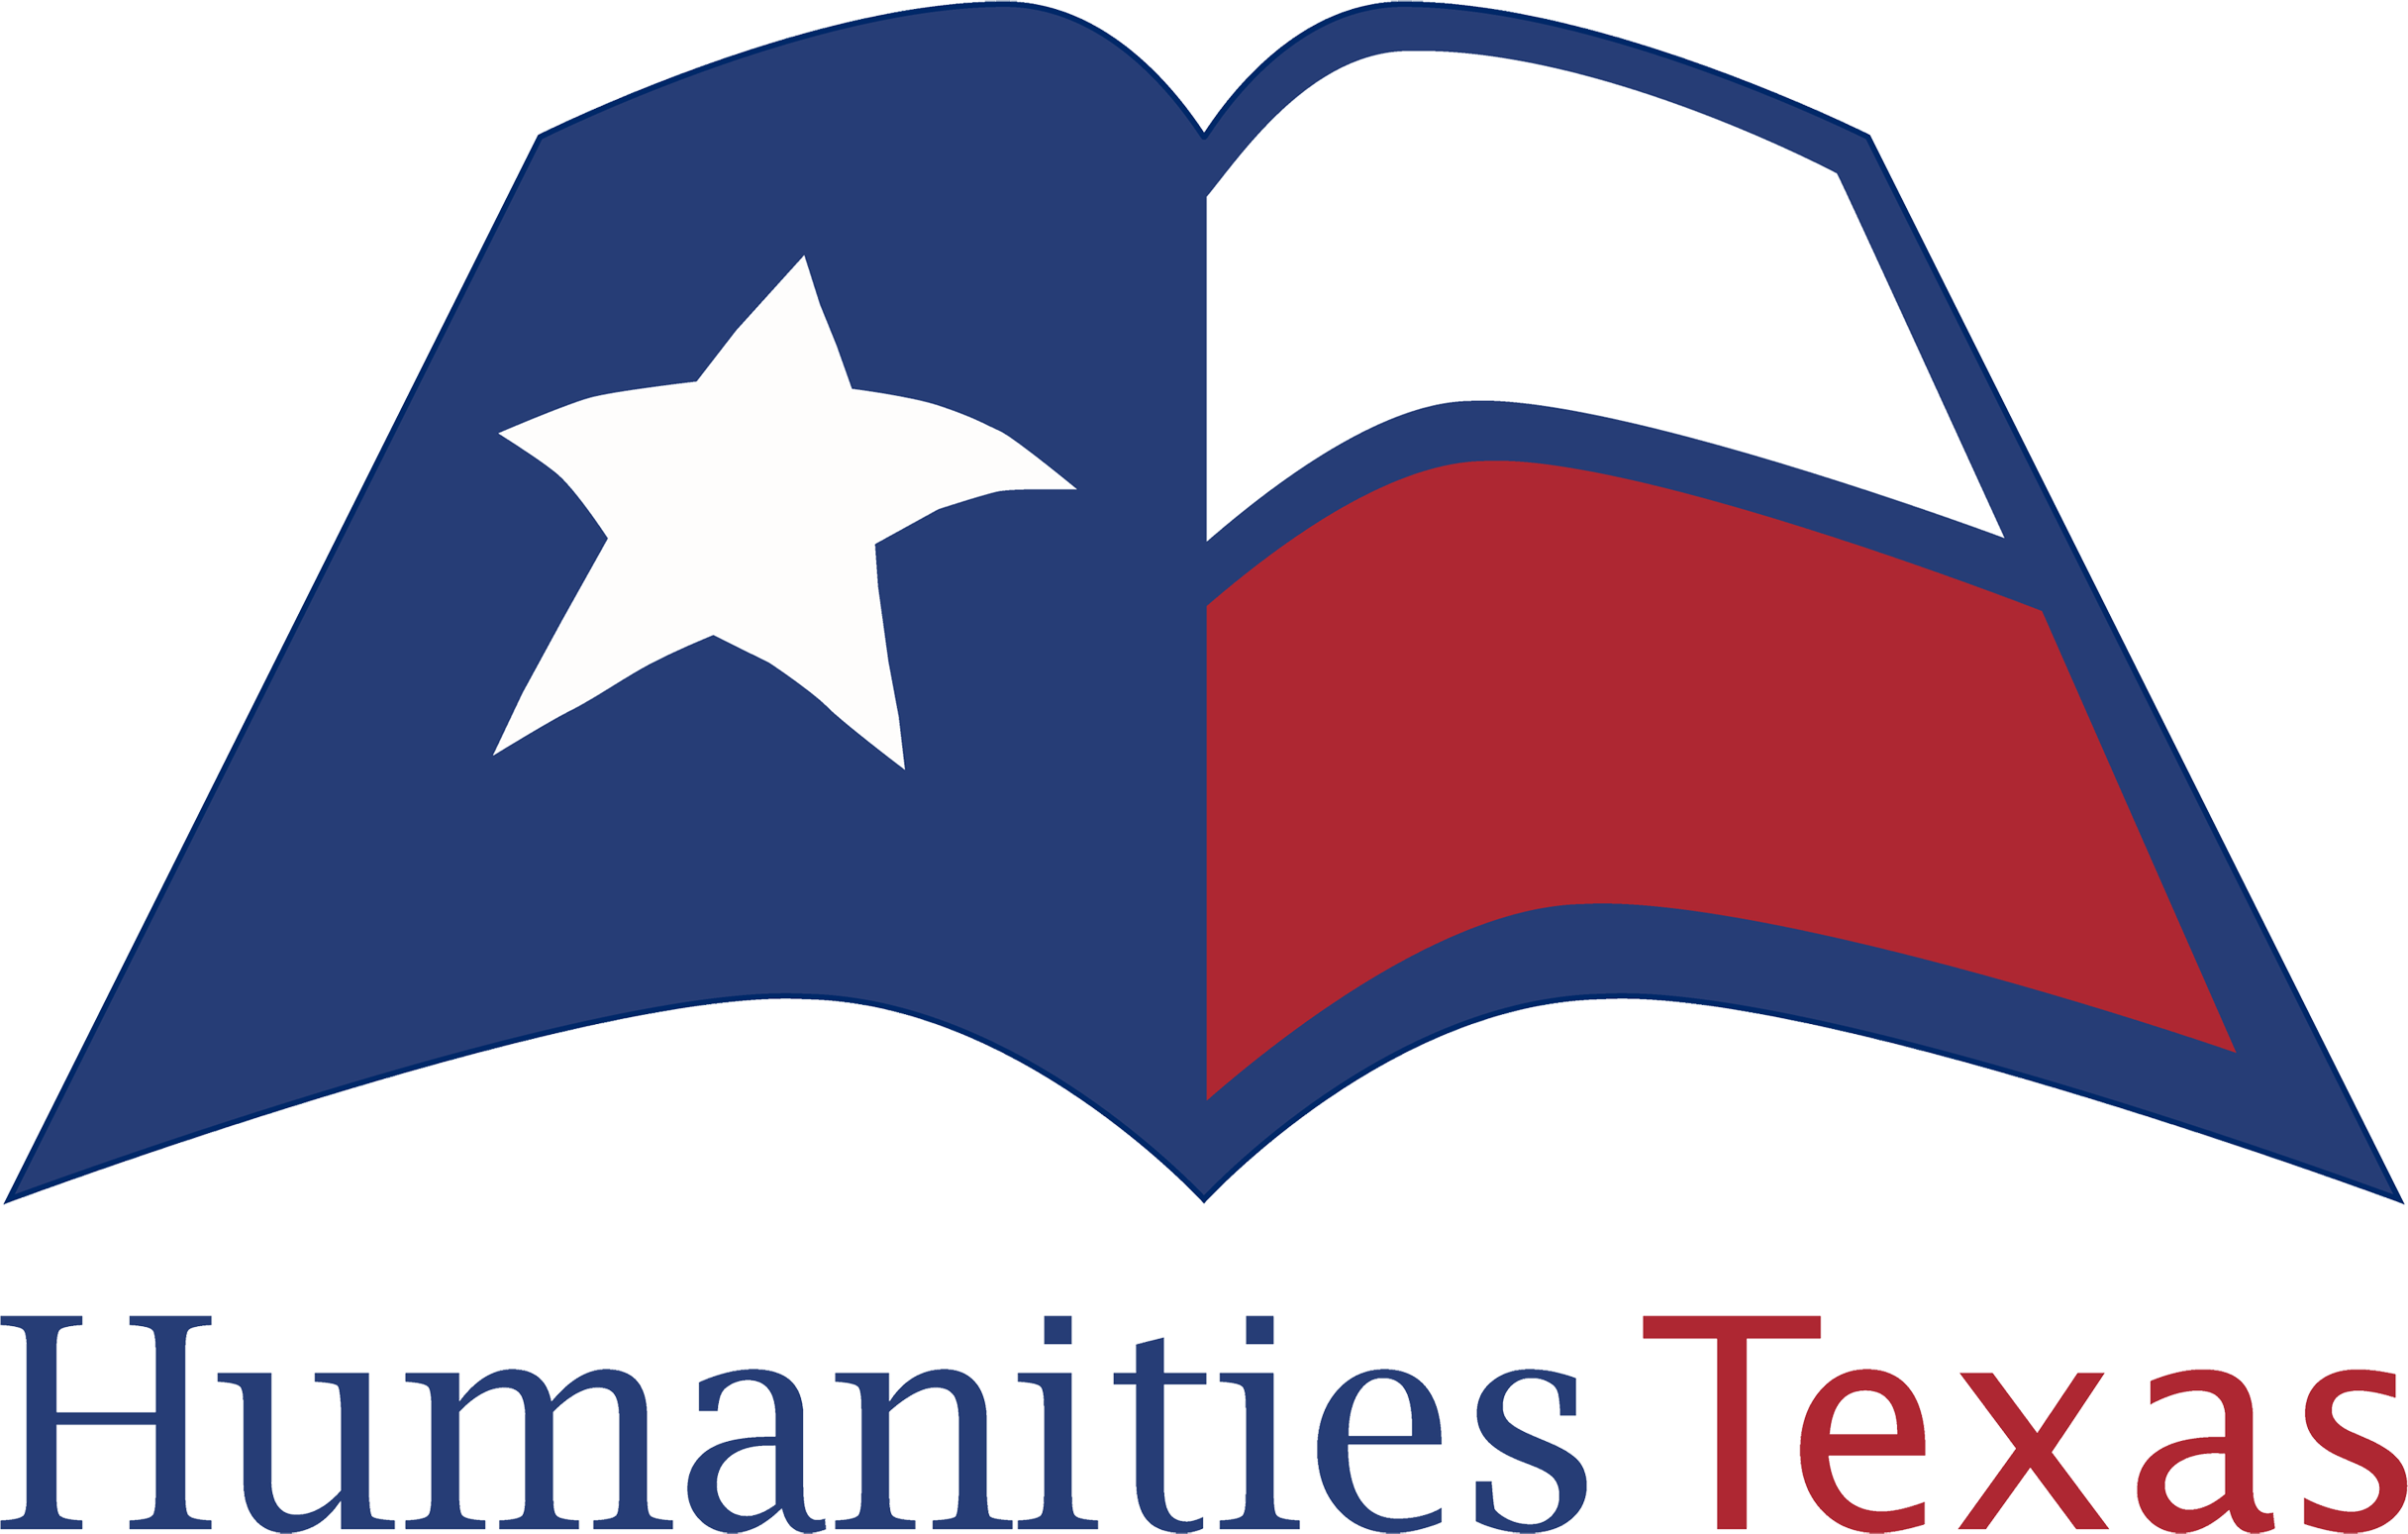 Logo humanities texas. Grades clipart benchmark test